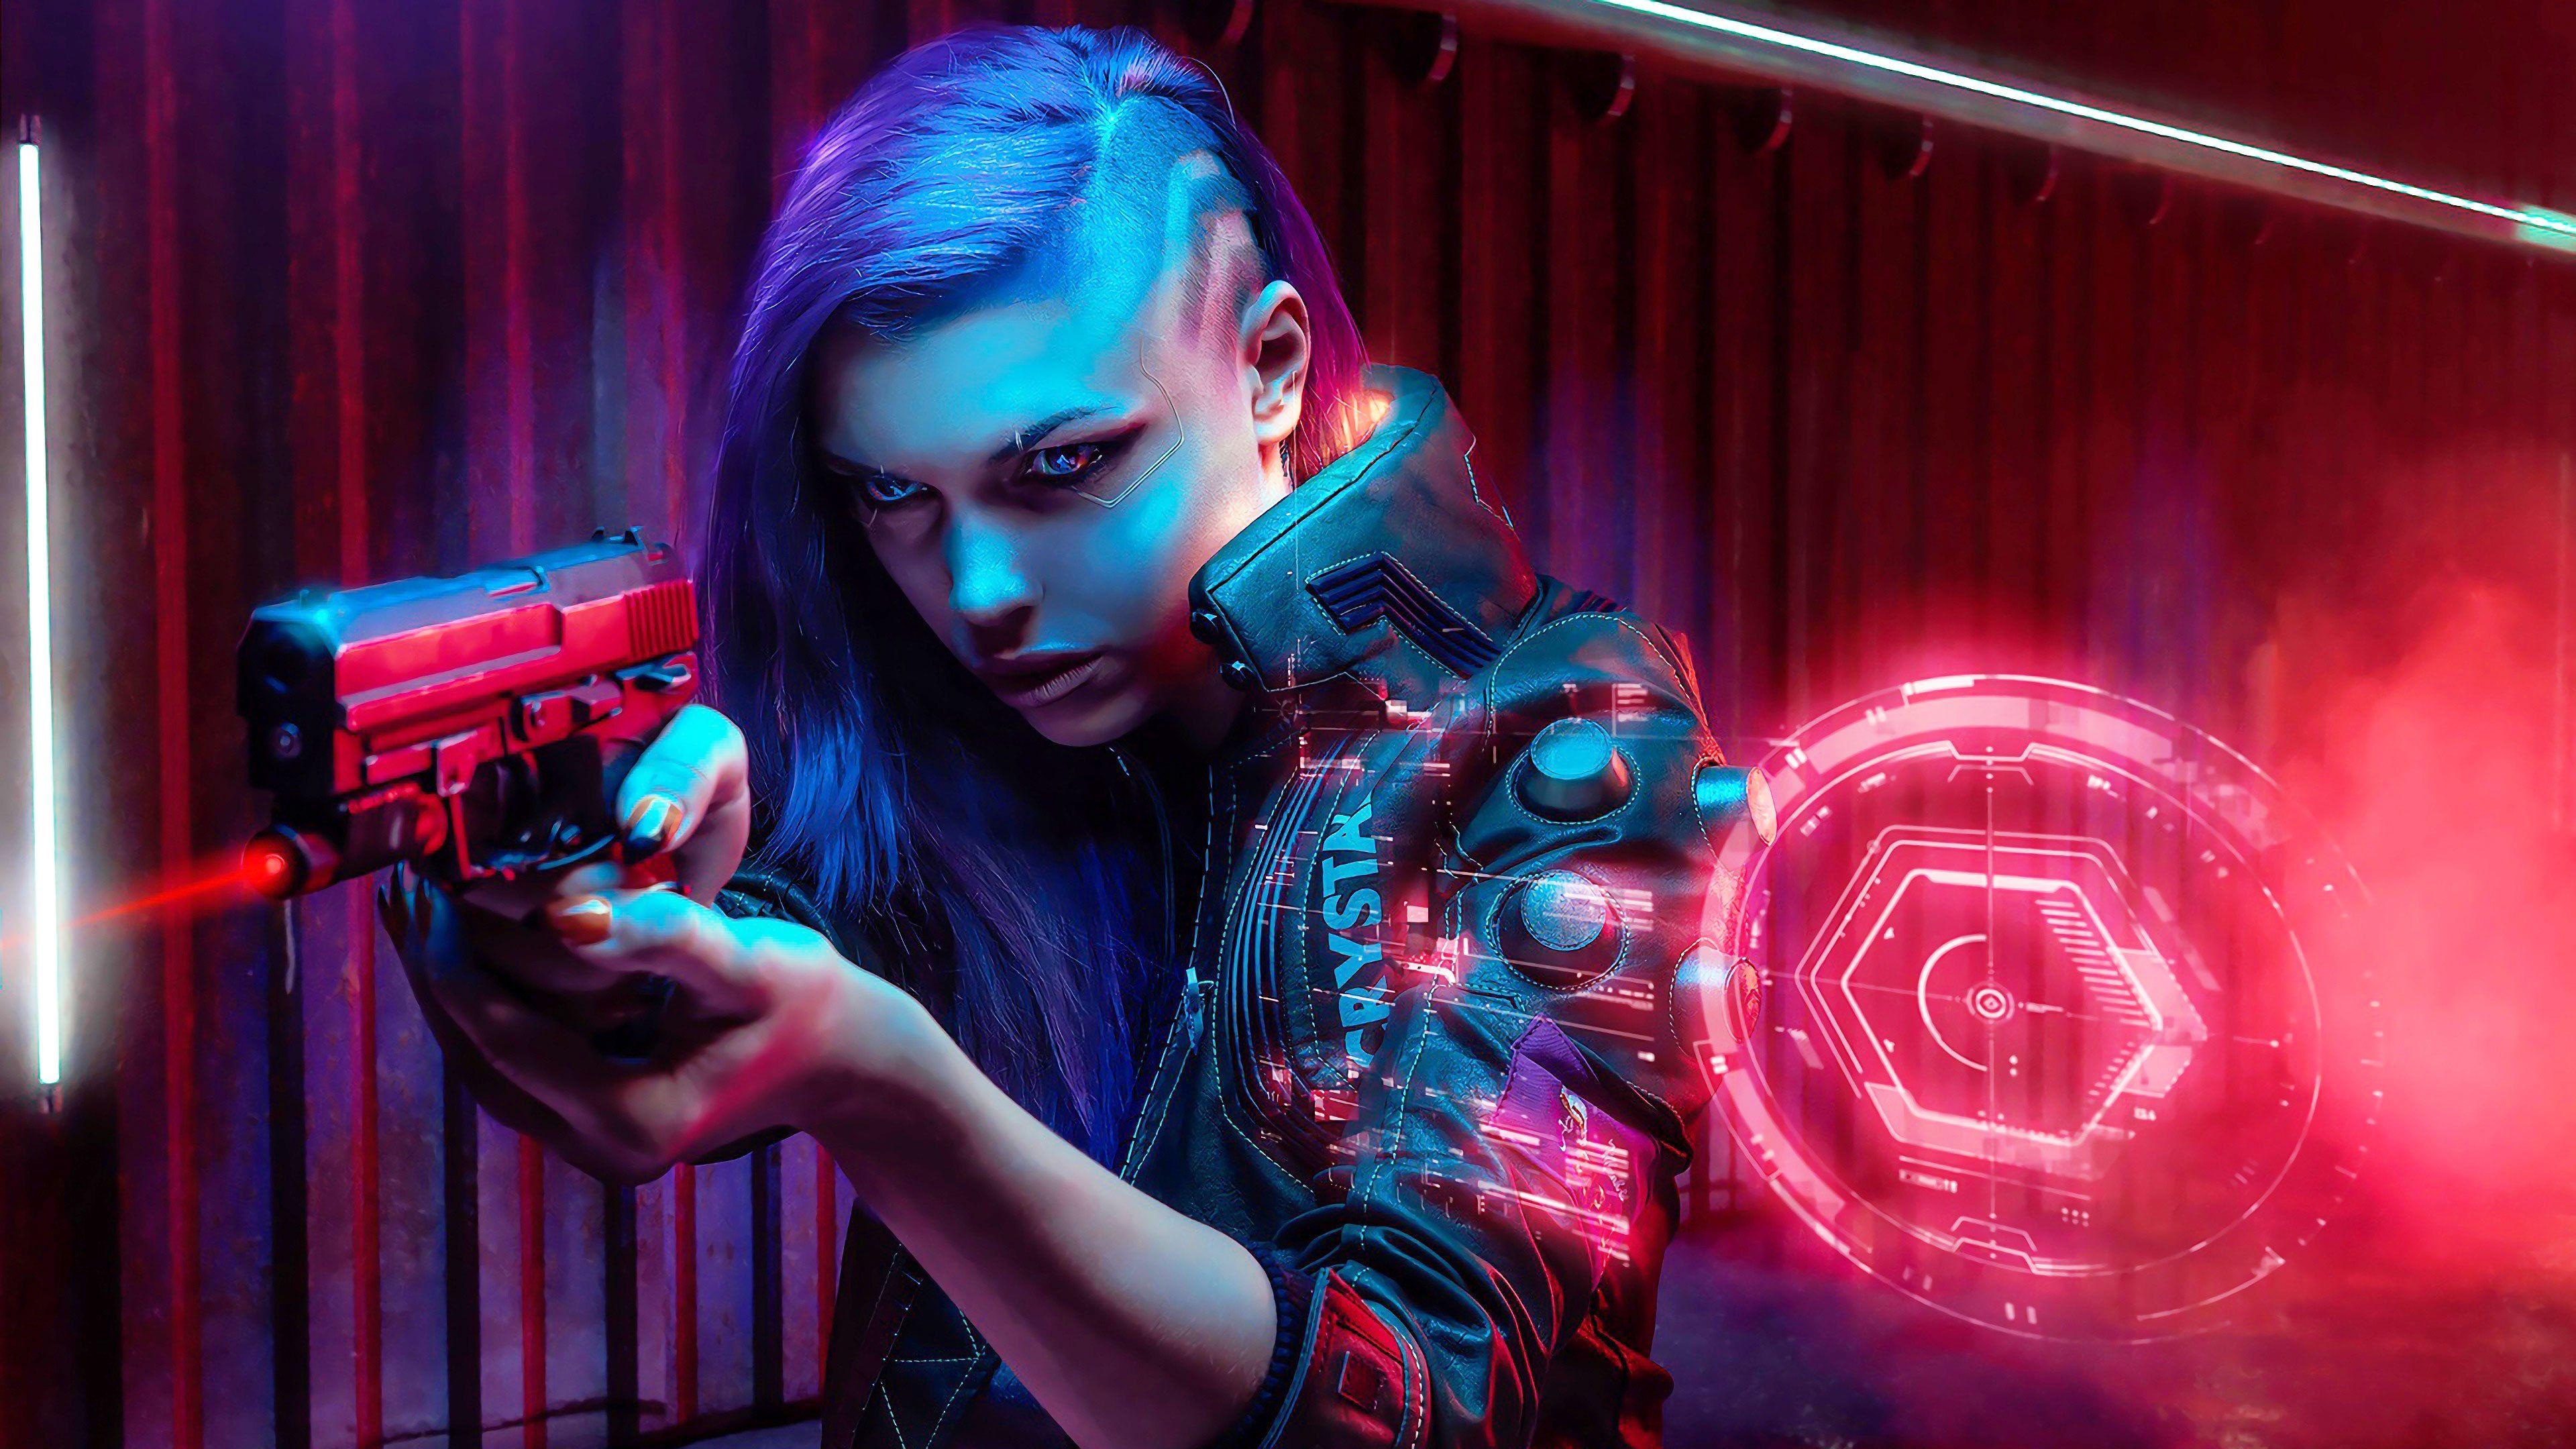 Cyberpunk Female Wallpapers Top Free Cyberpunk Female Backgrounds 8179